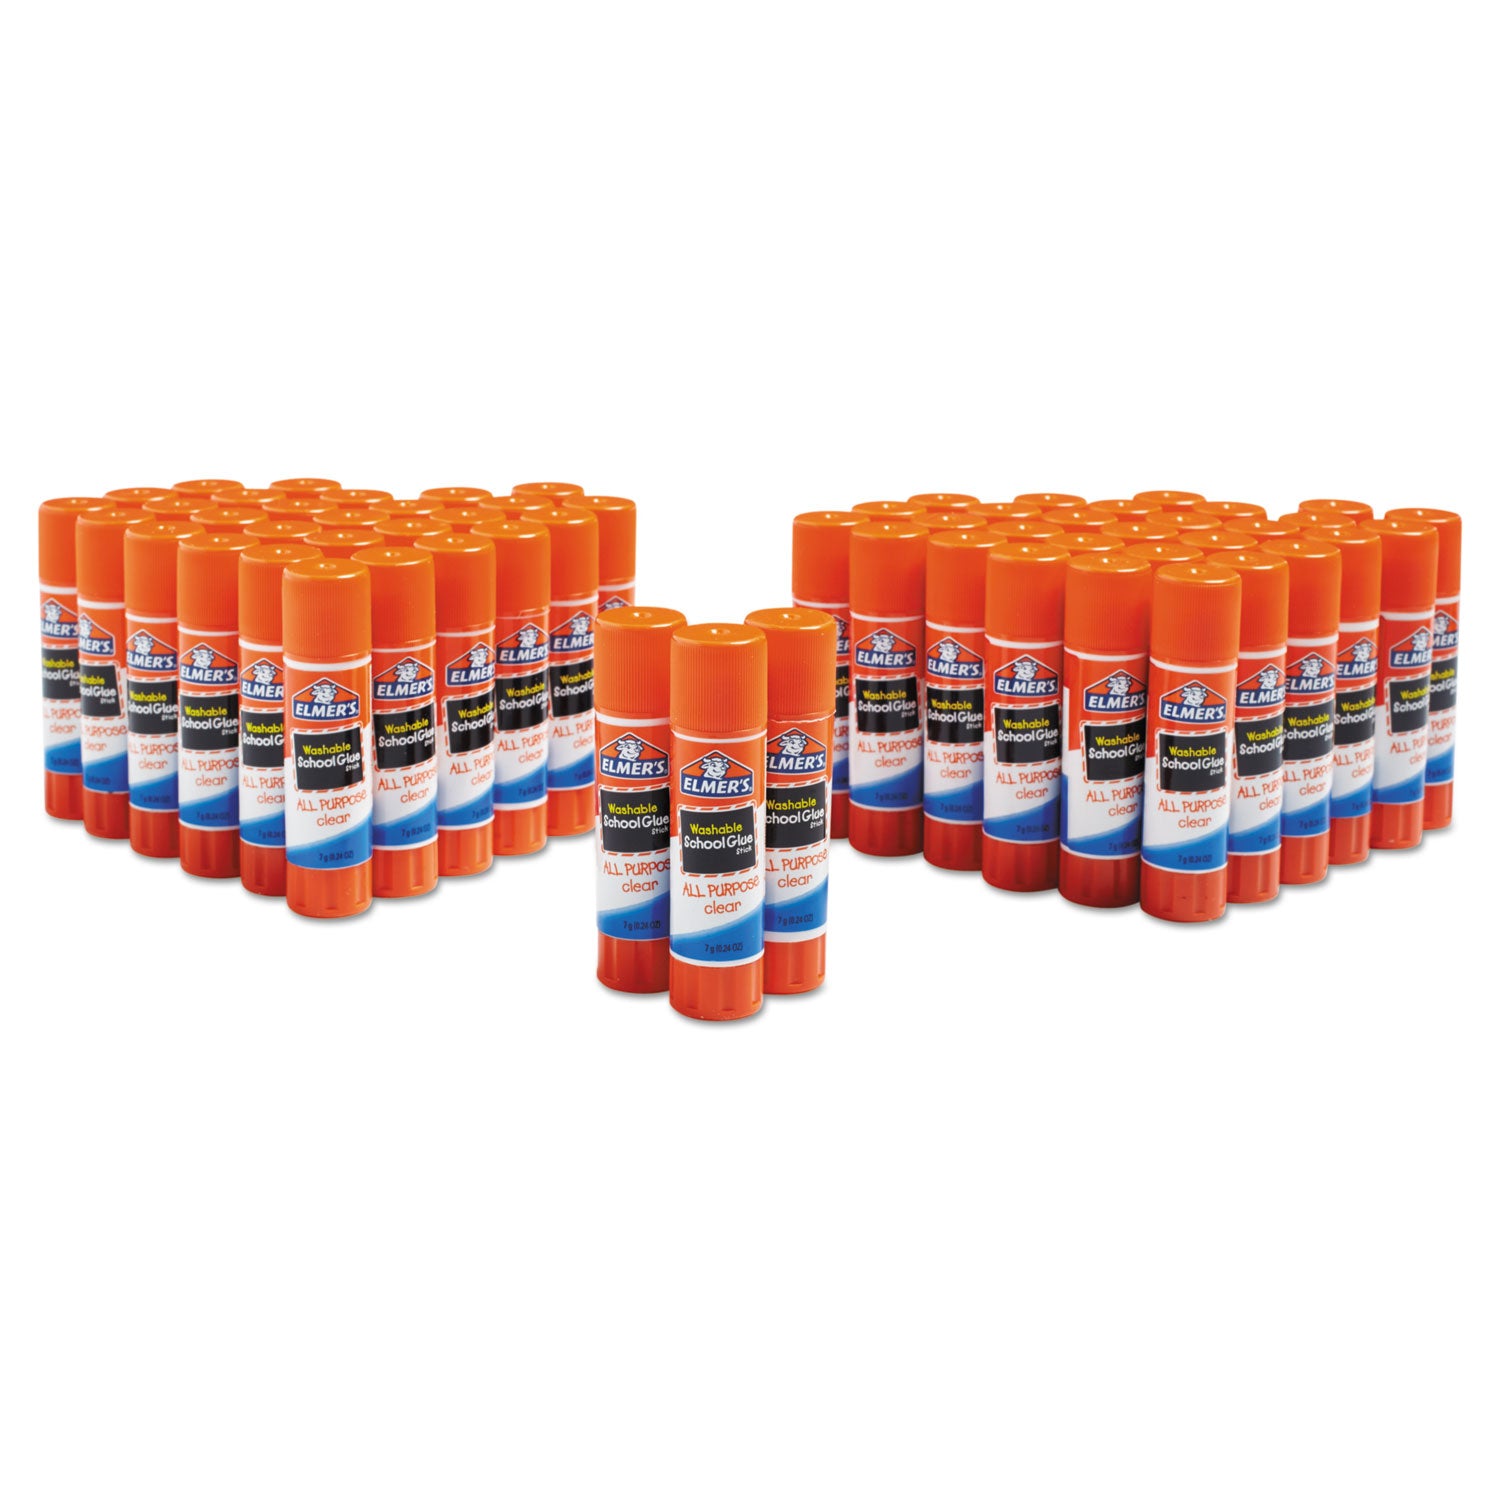 Washable School Glue Sticks, 0.24 oz, Applies and Dries Clear, 60/Box - 